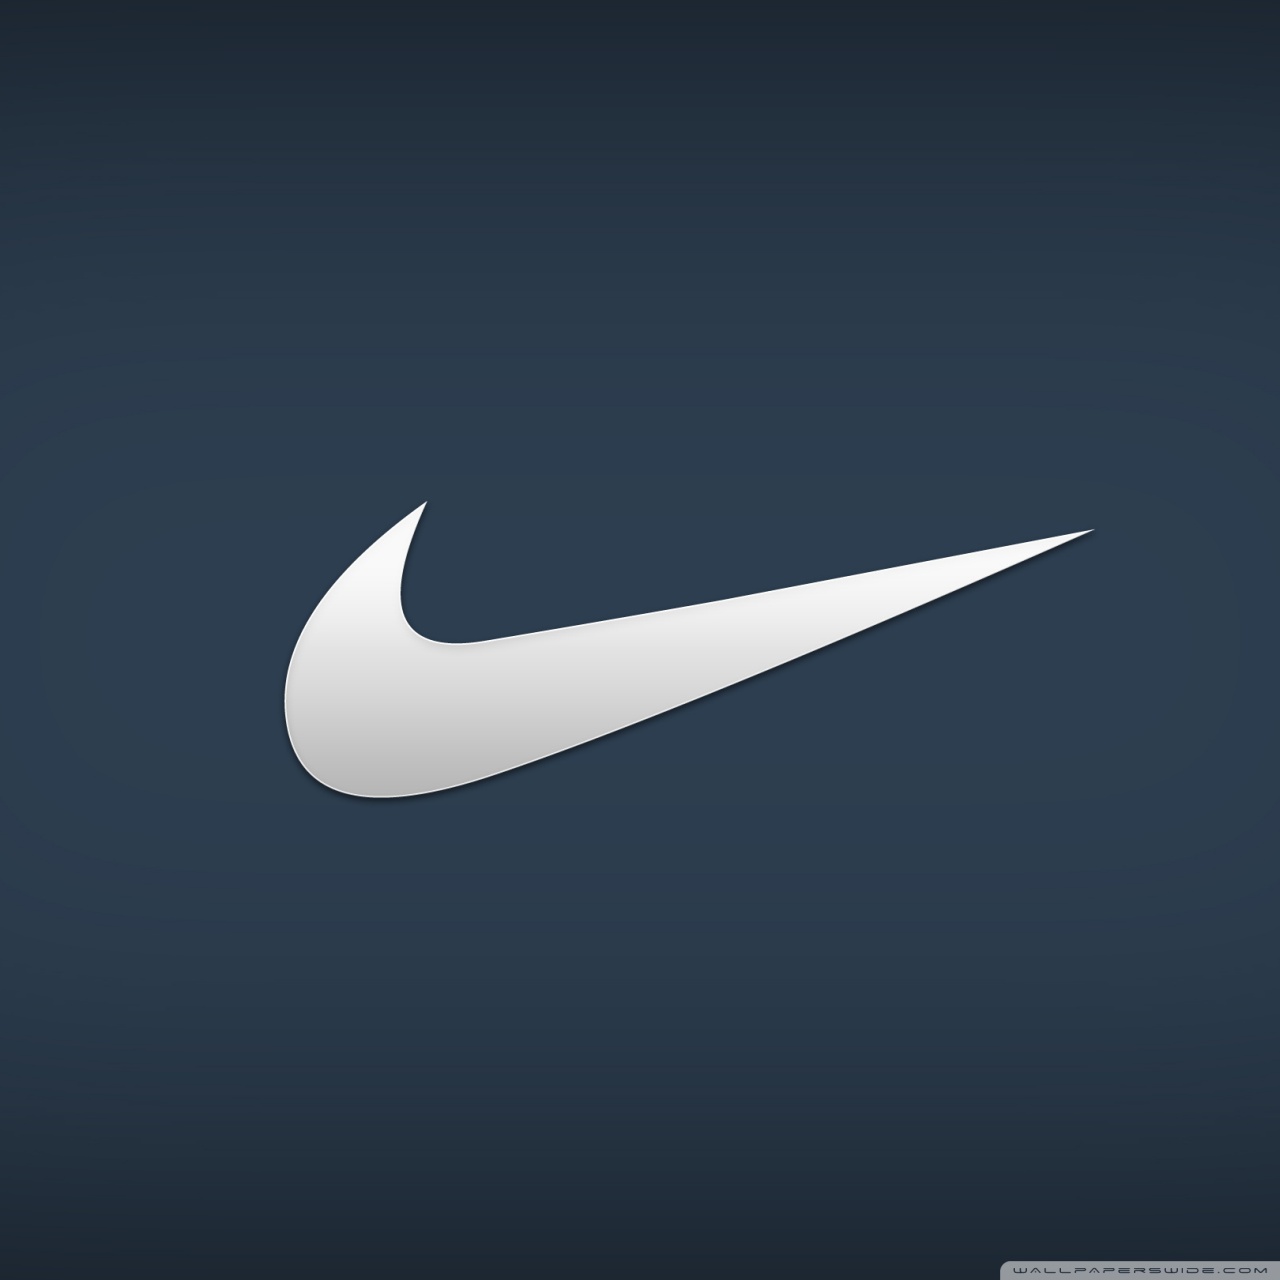 Nike Logo Ultra Hd Desktop Background Wallpaper For 4k Uhd Tv